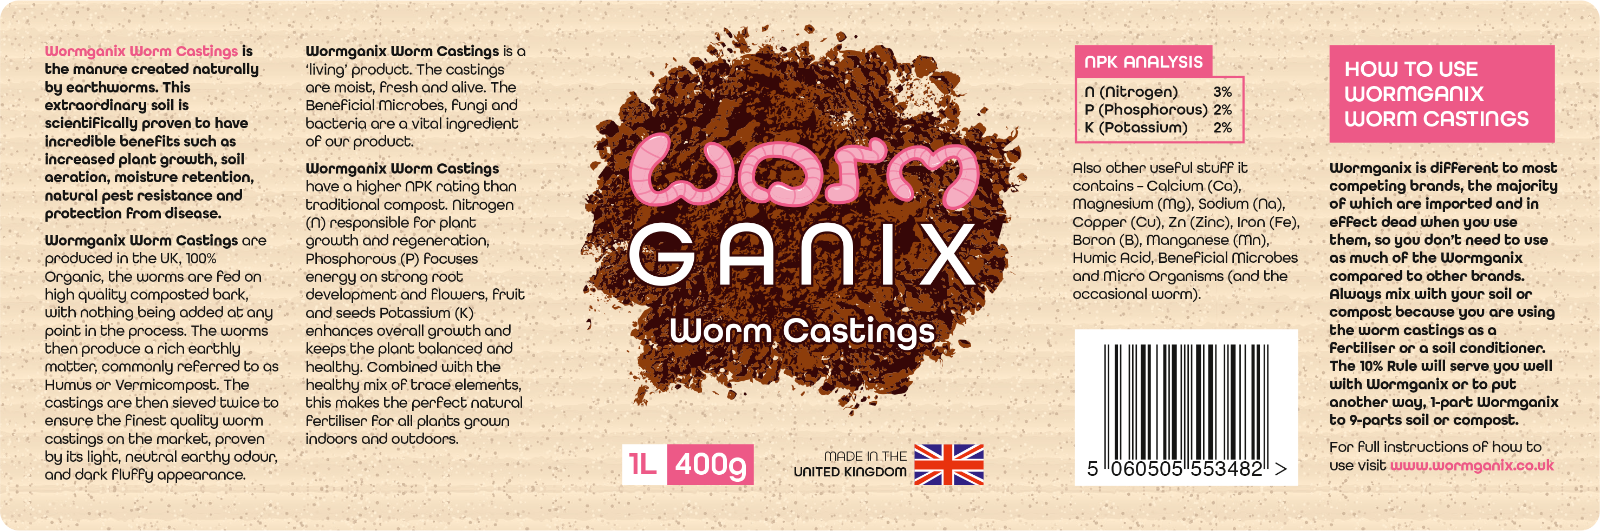 Wormganix 1 Litre Bucket Premium Worm Castings Vermicompost Organic Moist Fresh